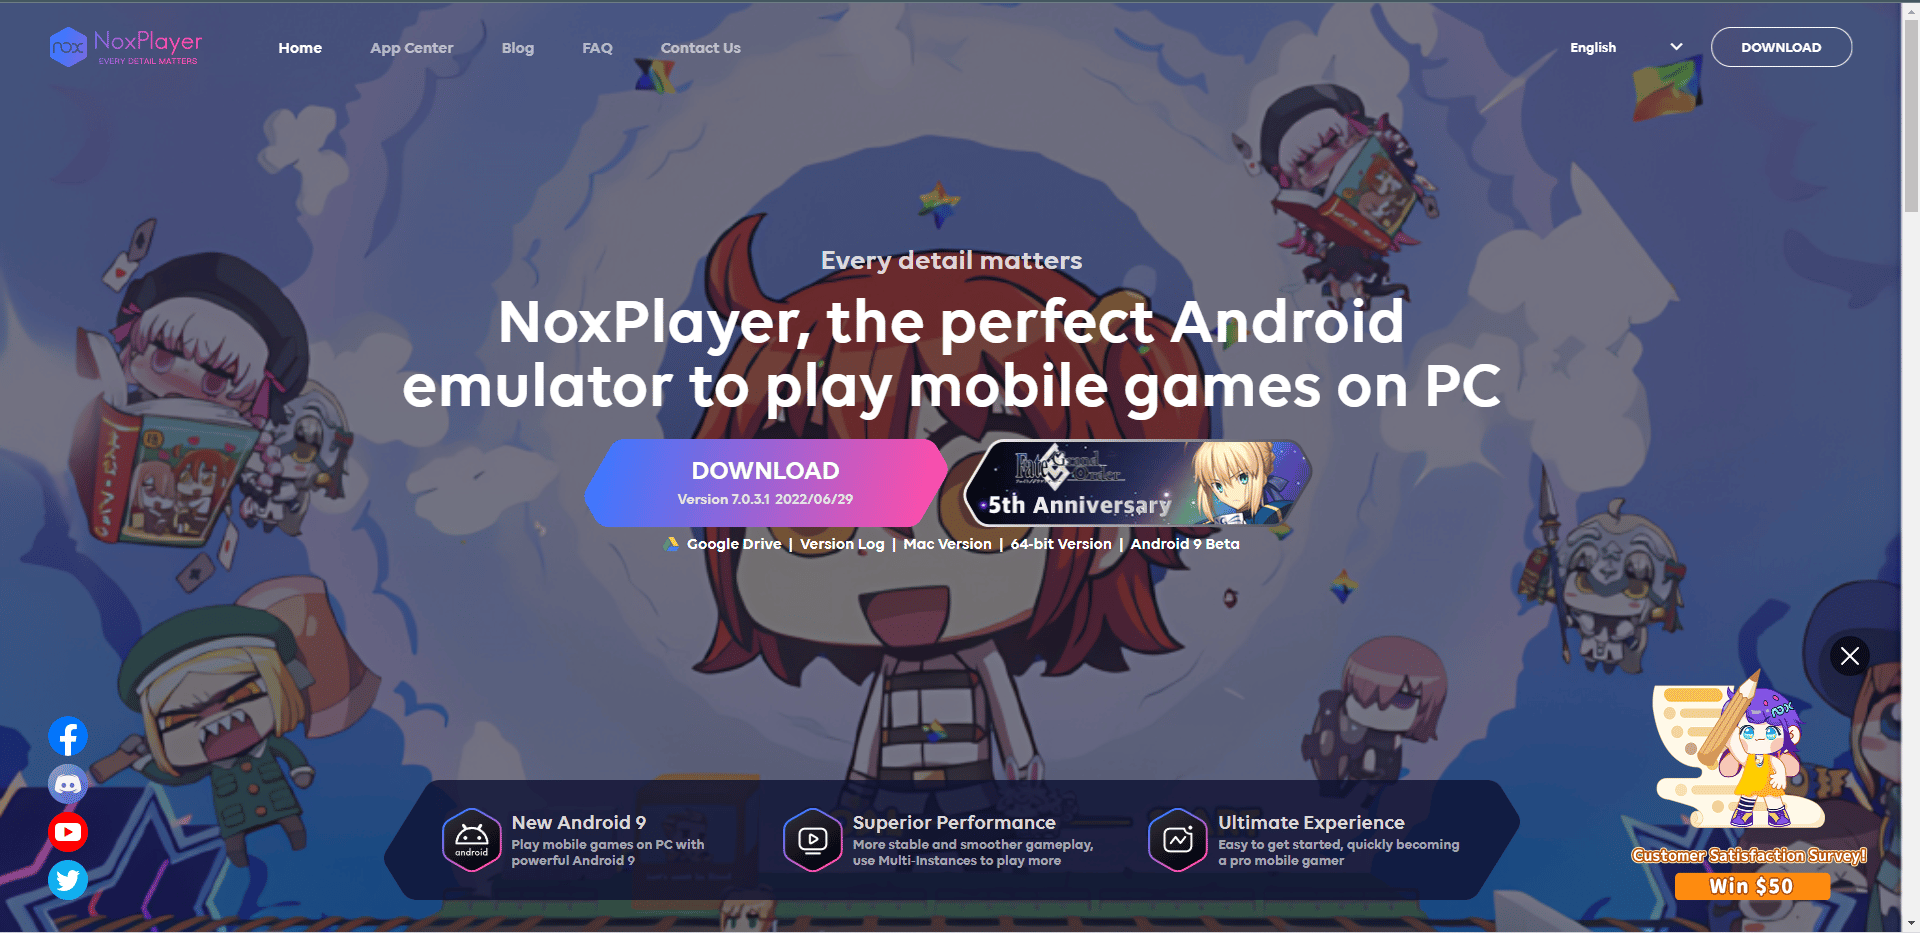 Nox player official website